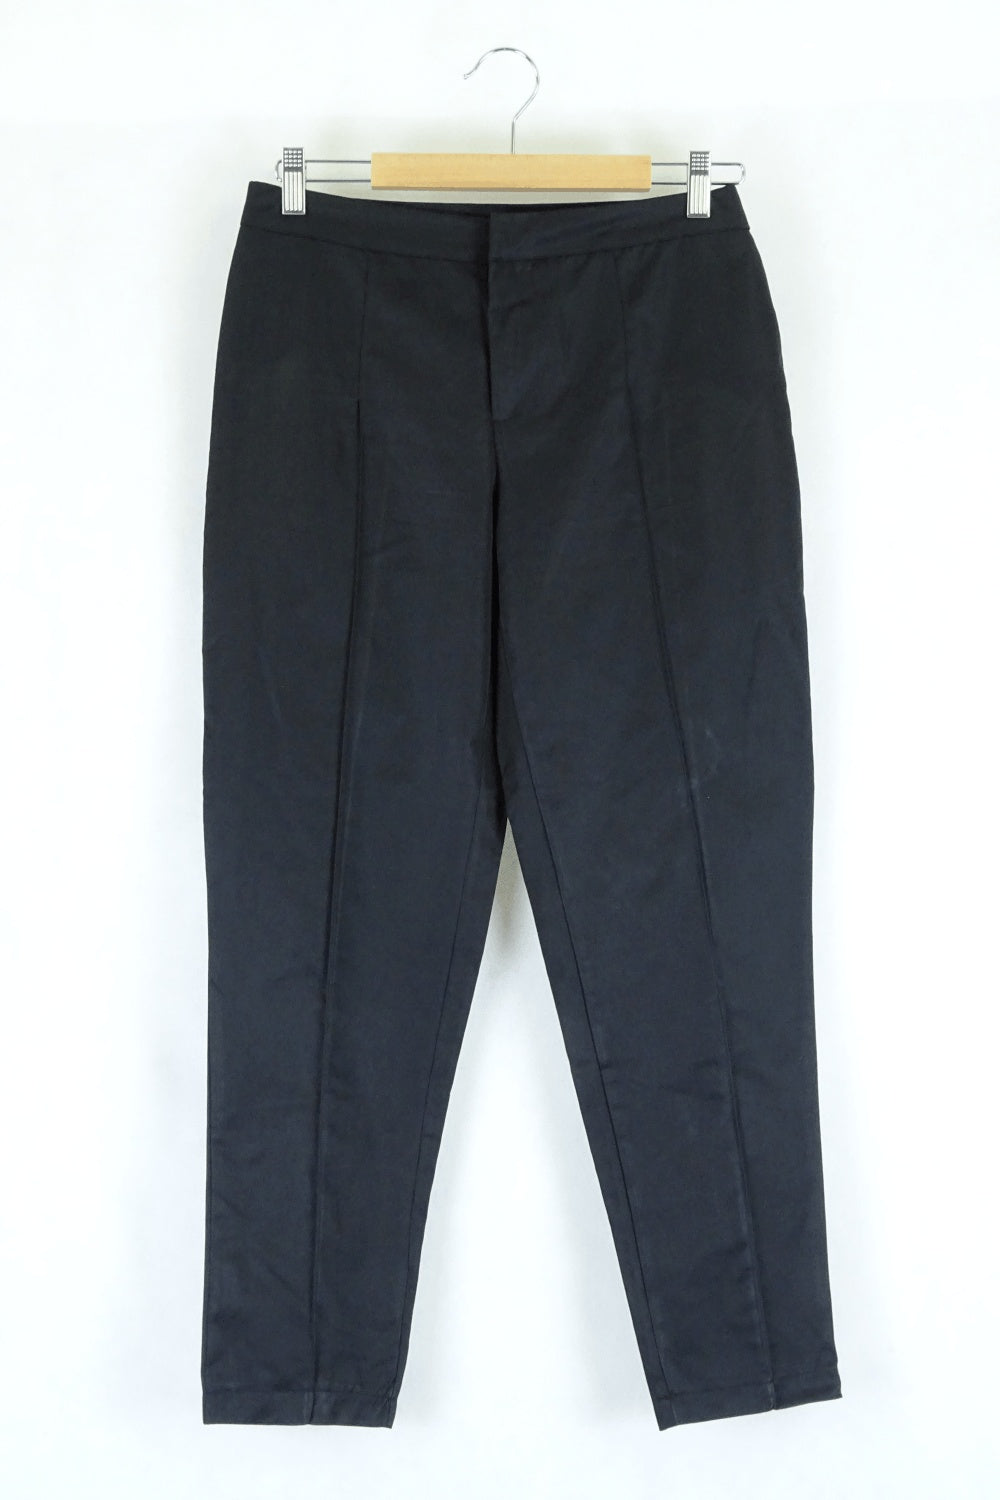 Zara Blue Pants XS - Reluv Clothing Australia